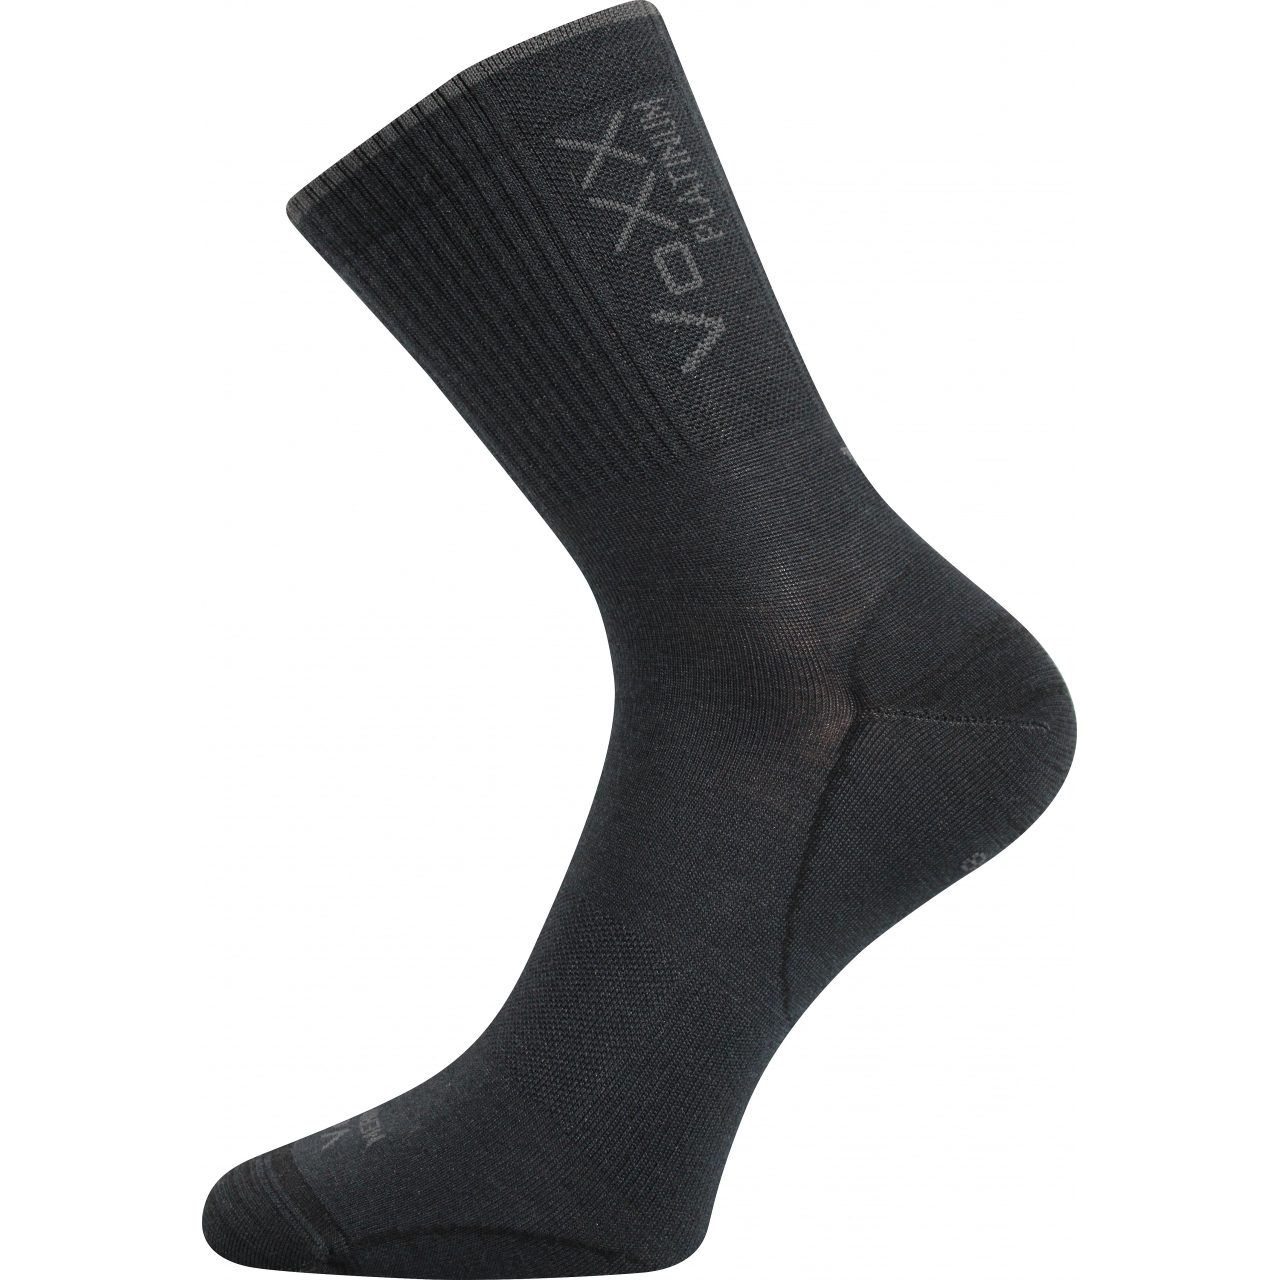 Ponožky unisex klasické Voxx Radius - tmavě šedé, 35-38